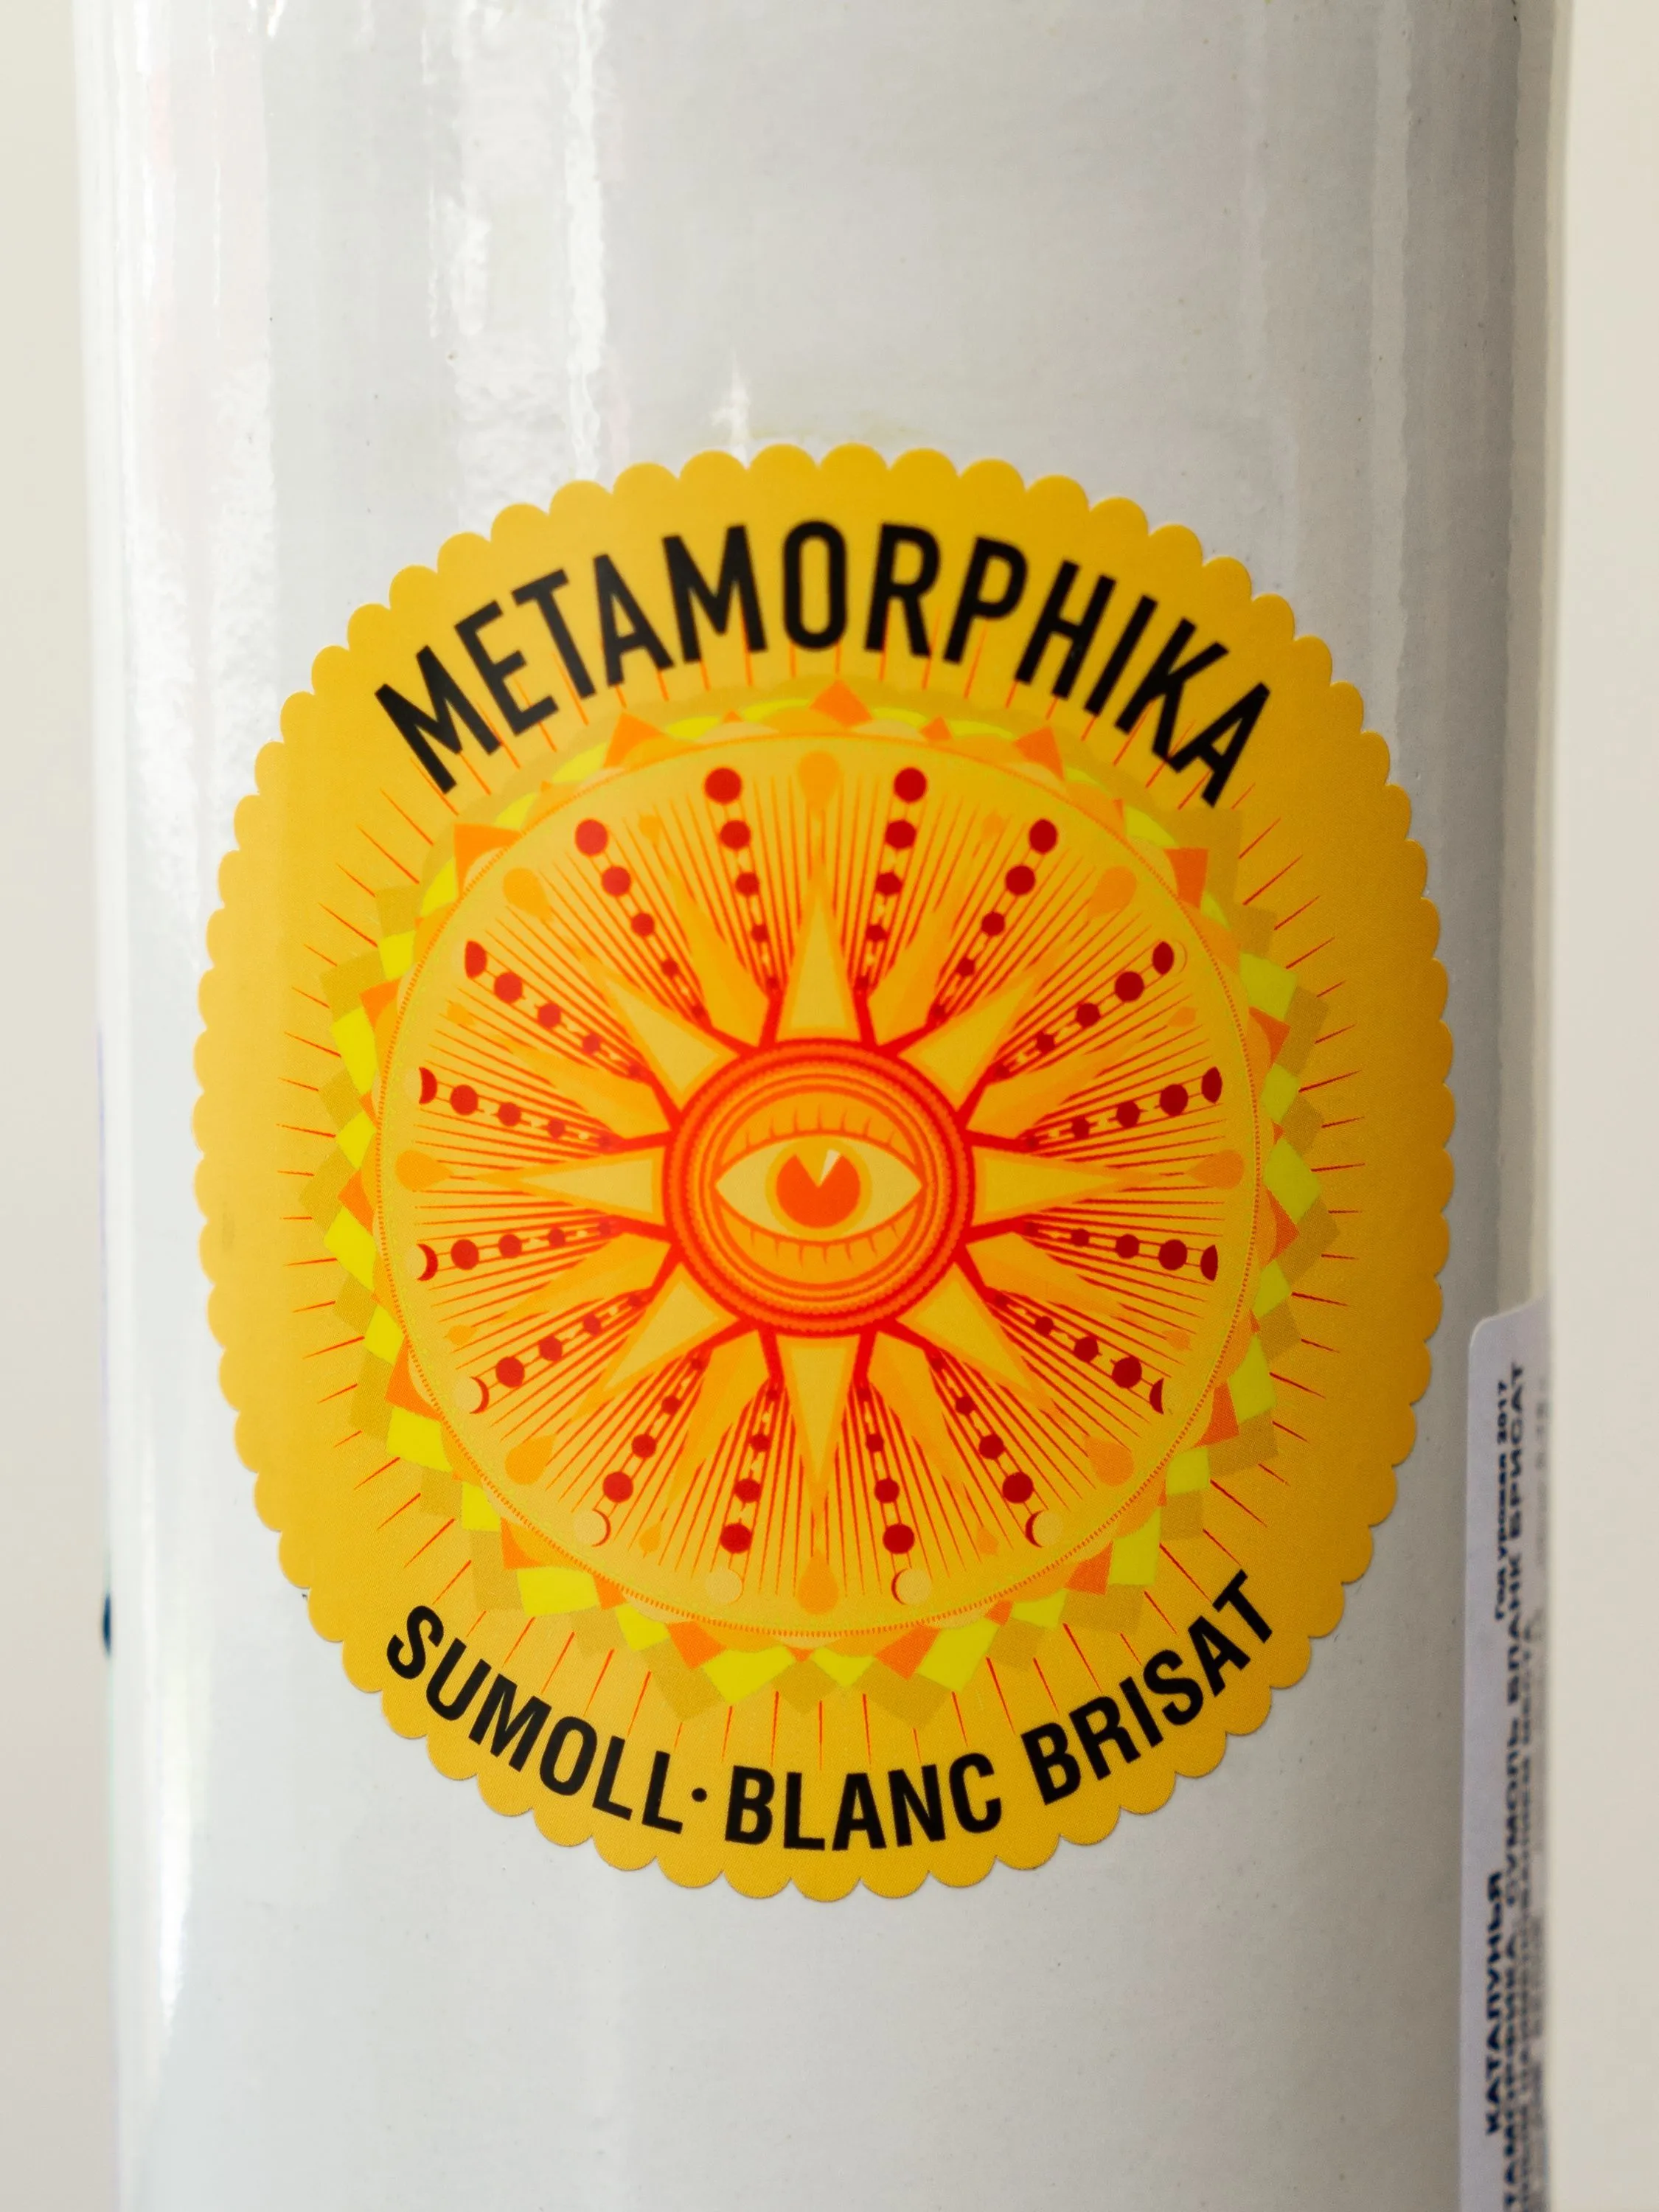 Вино Costador Metamorphika Sumoll Blanc Brisat / Каталунья Костадор Метаморфика Сумоль Бланк Брисат